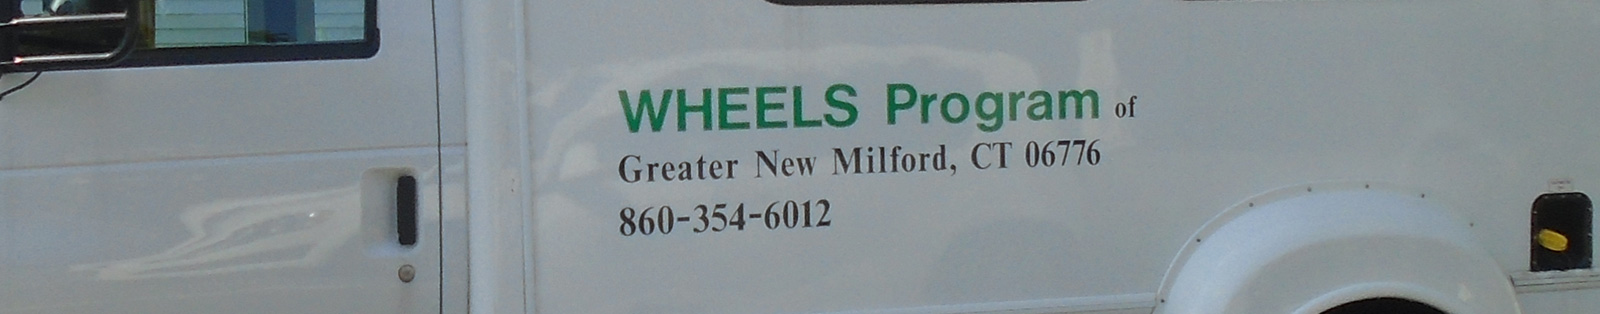 NM Wheels